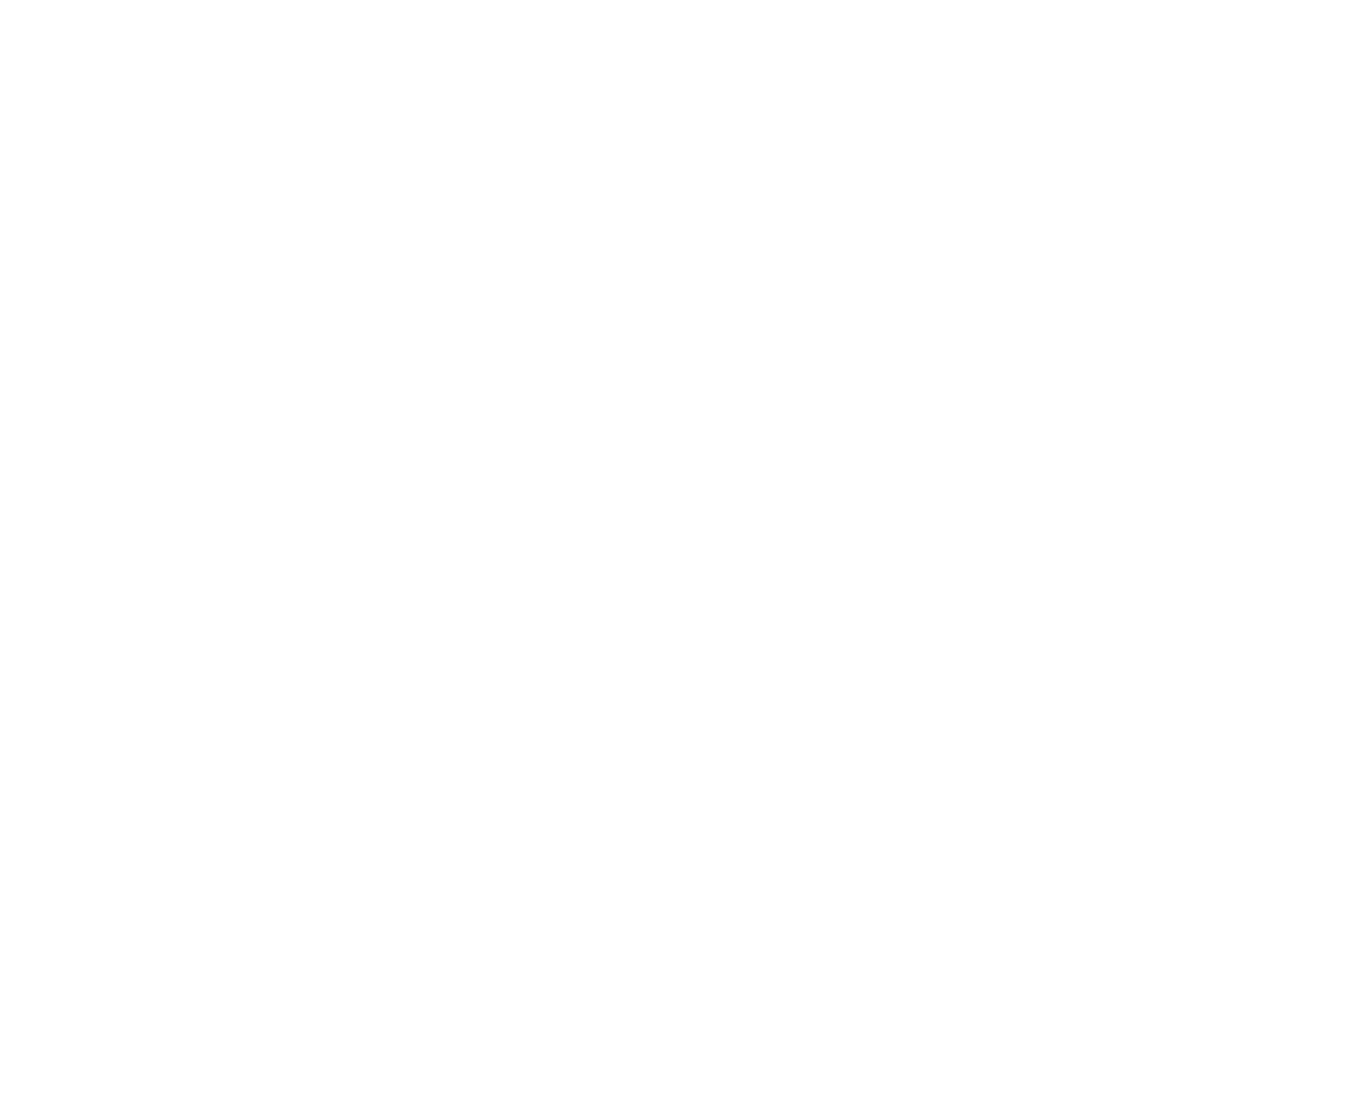 Set Up Camp